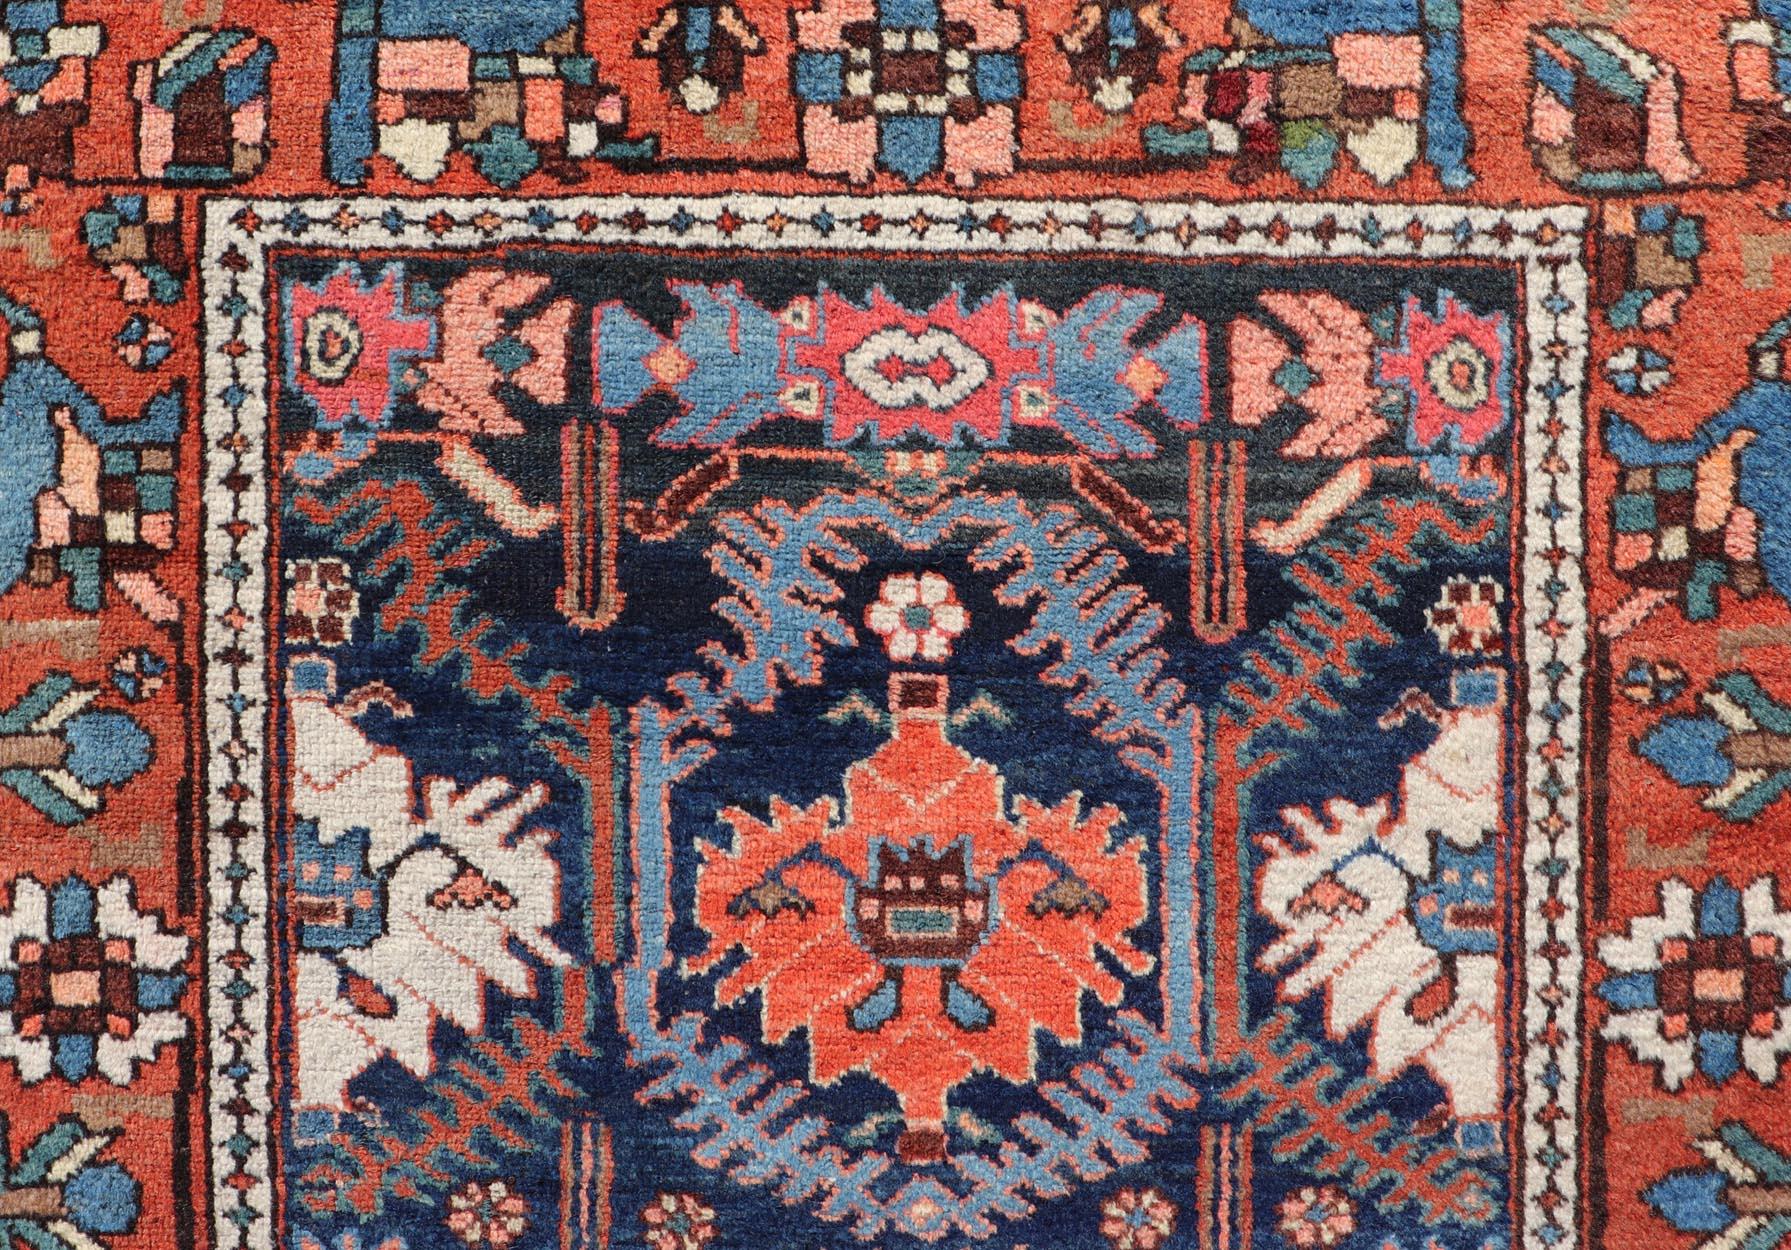 Colorful Antique Persian Bakhtiari Gallery Runner with All-Over Tribal Design. Keivan Woven Arts / rug EMB-222191-15451, country of origin / type: Iran / Bakhtiari, circa 1920
Measures: 3'8 x 12'9 
This beautiful antique Bakhtiari rug from Persia